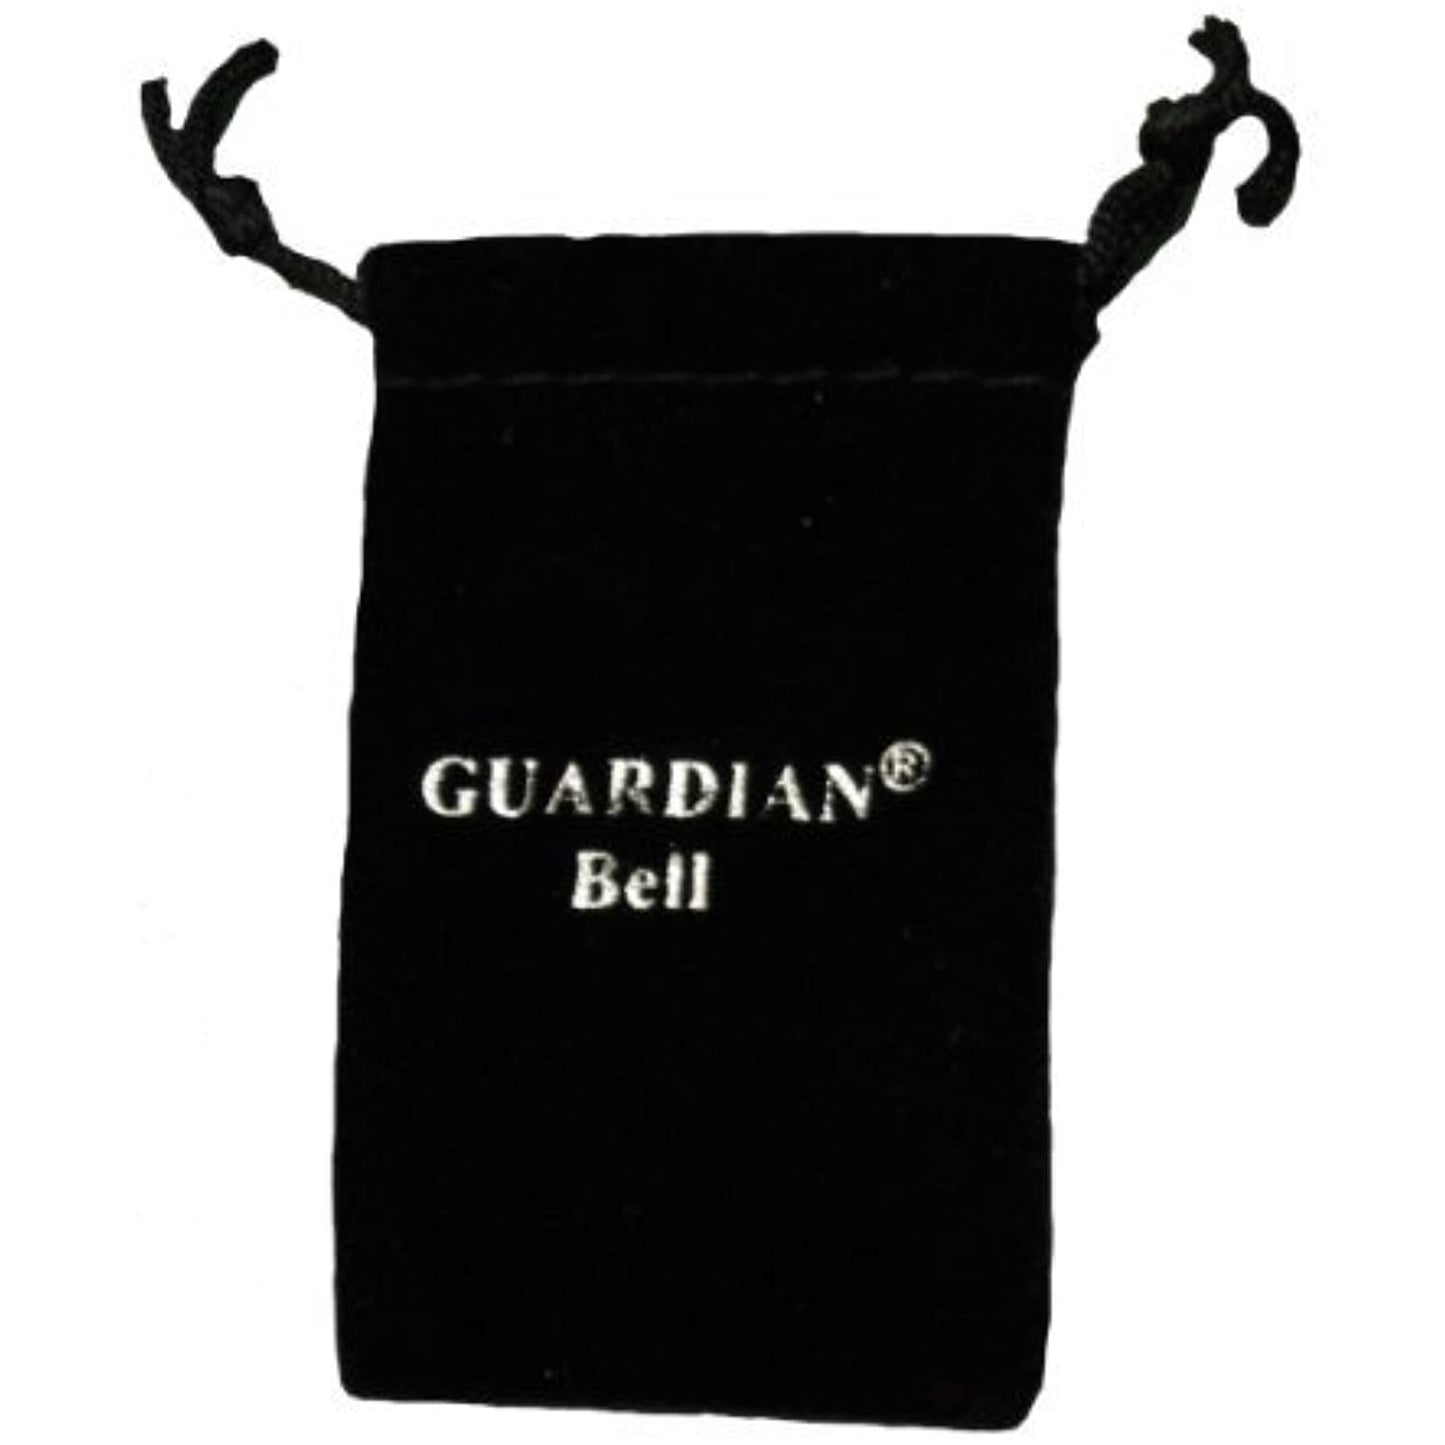 VANCE Its a Boy Guardian Bell